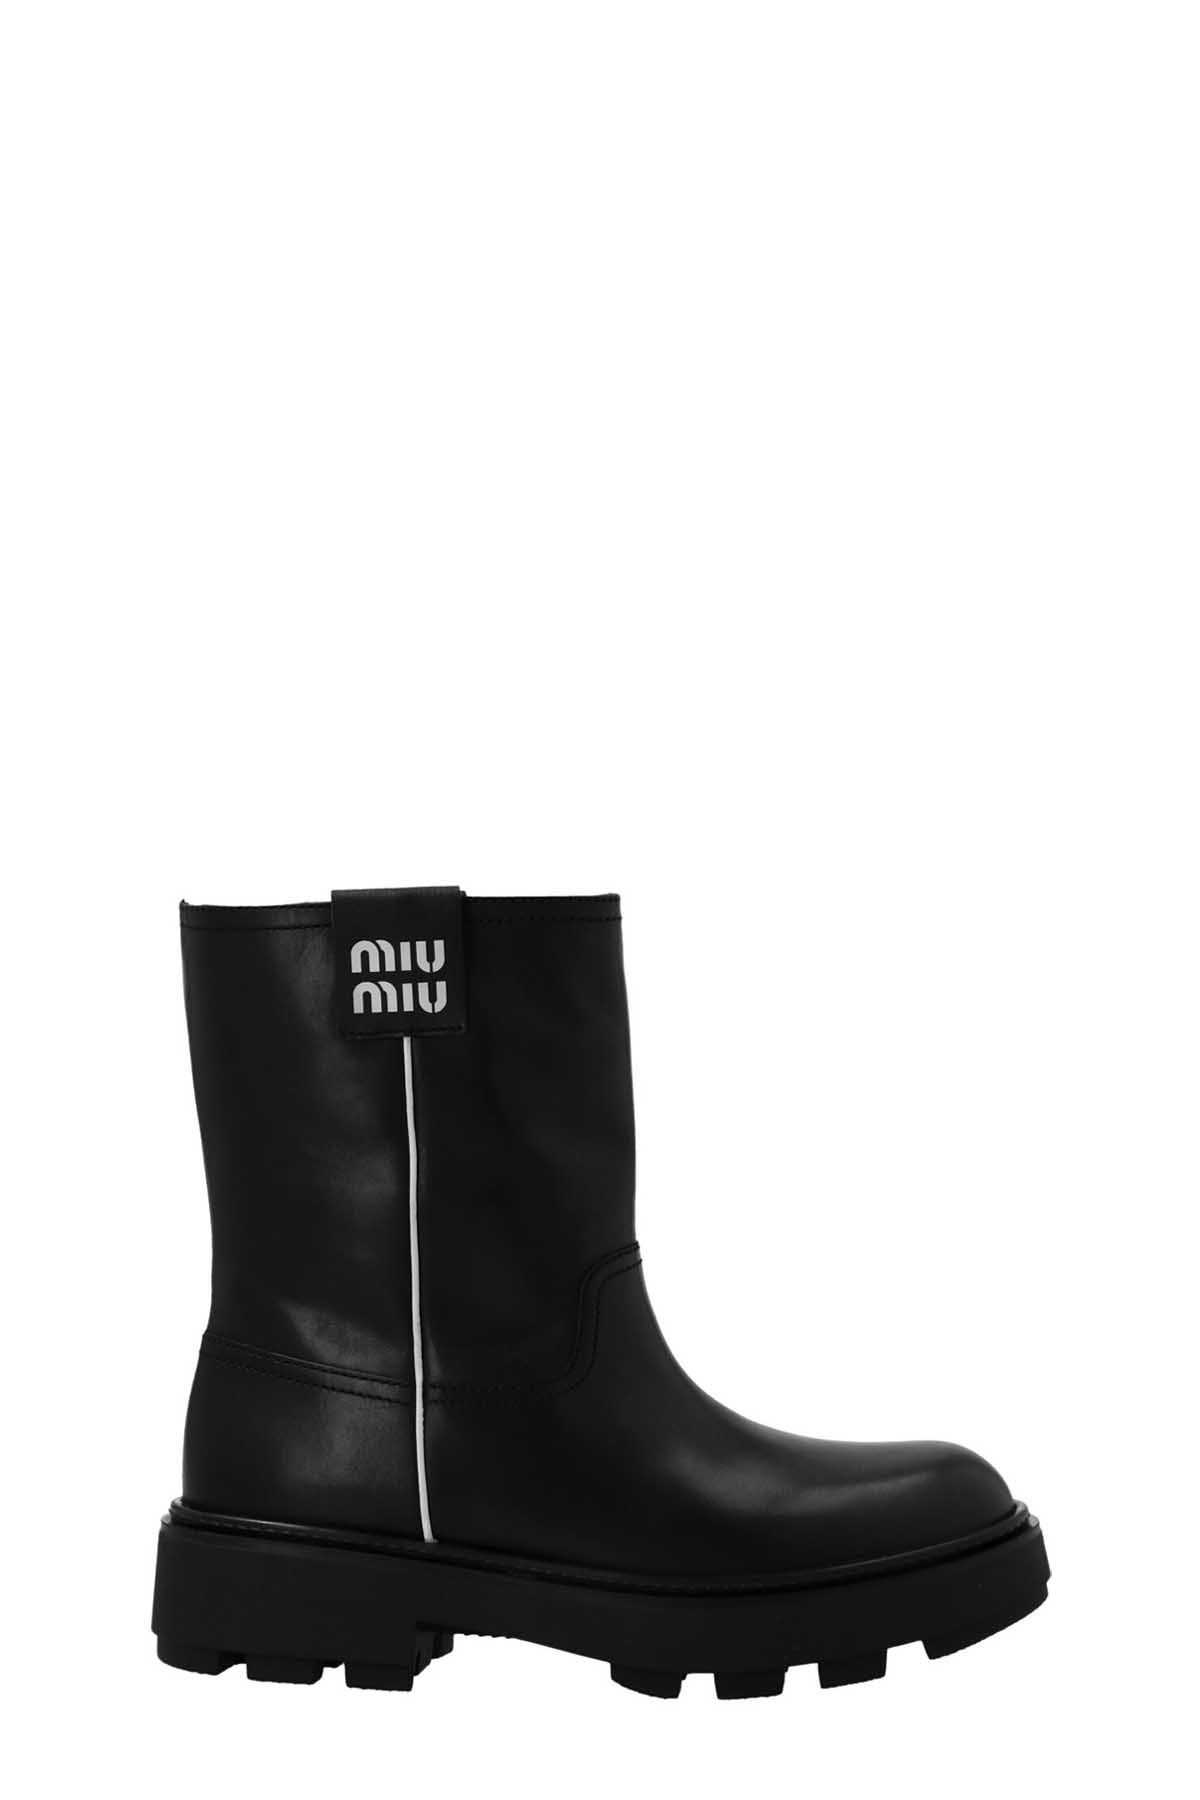 MIU MIU Logo Application Ankle Boots